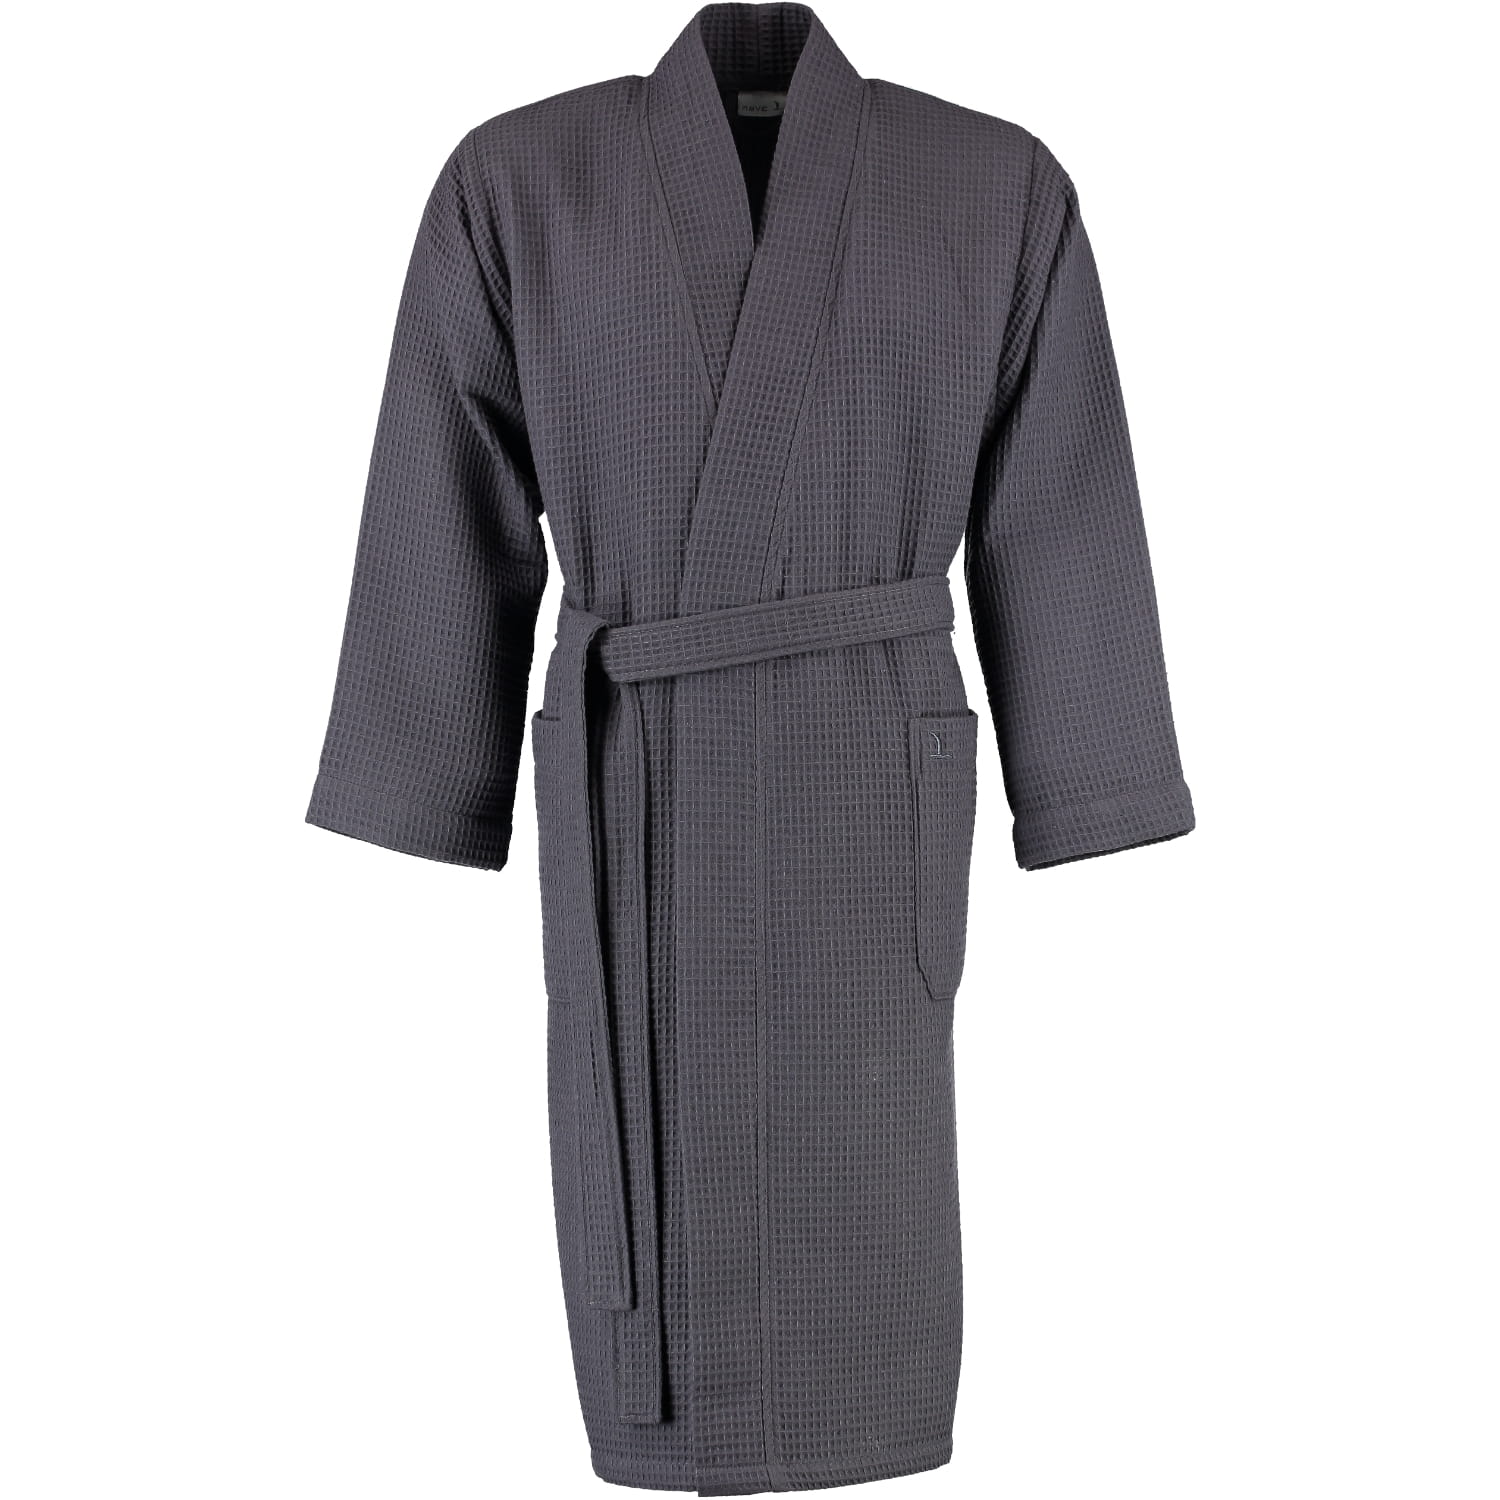 Möve Bademantel Kimono Homewear - Farbe: graphit - 843 (2-7612/0663) |  unisex | Bademantel